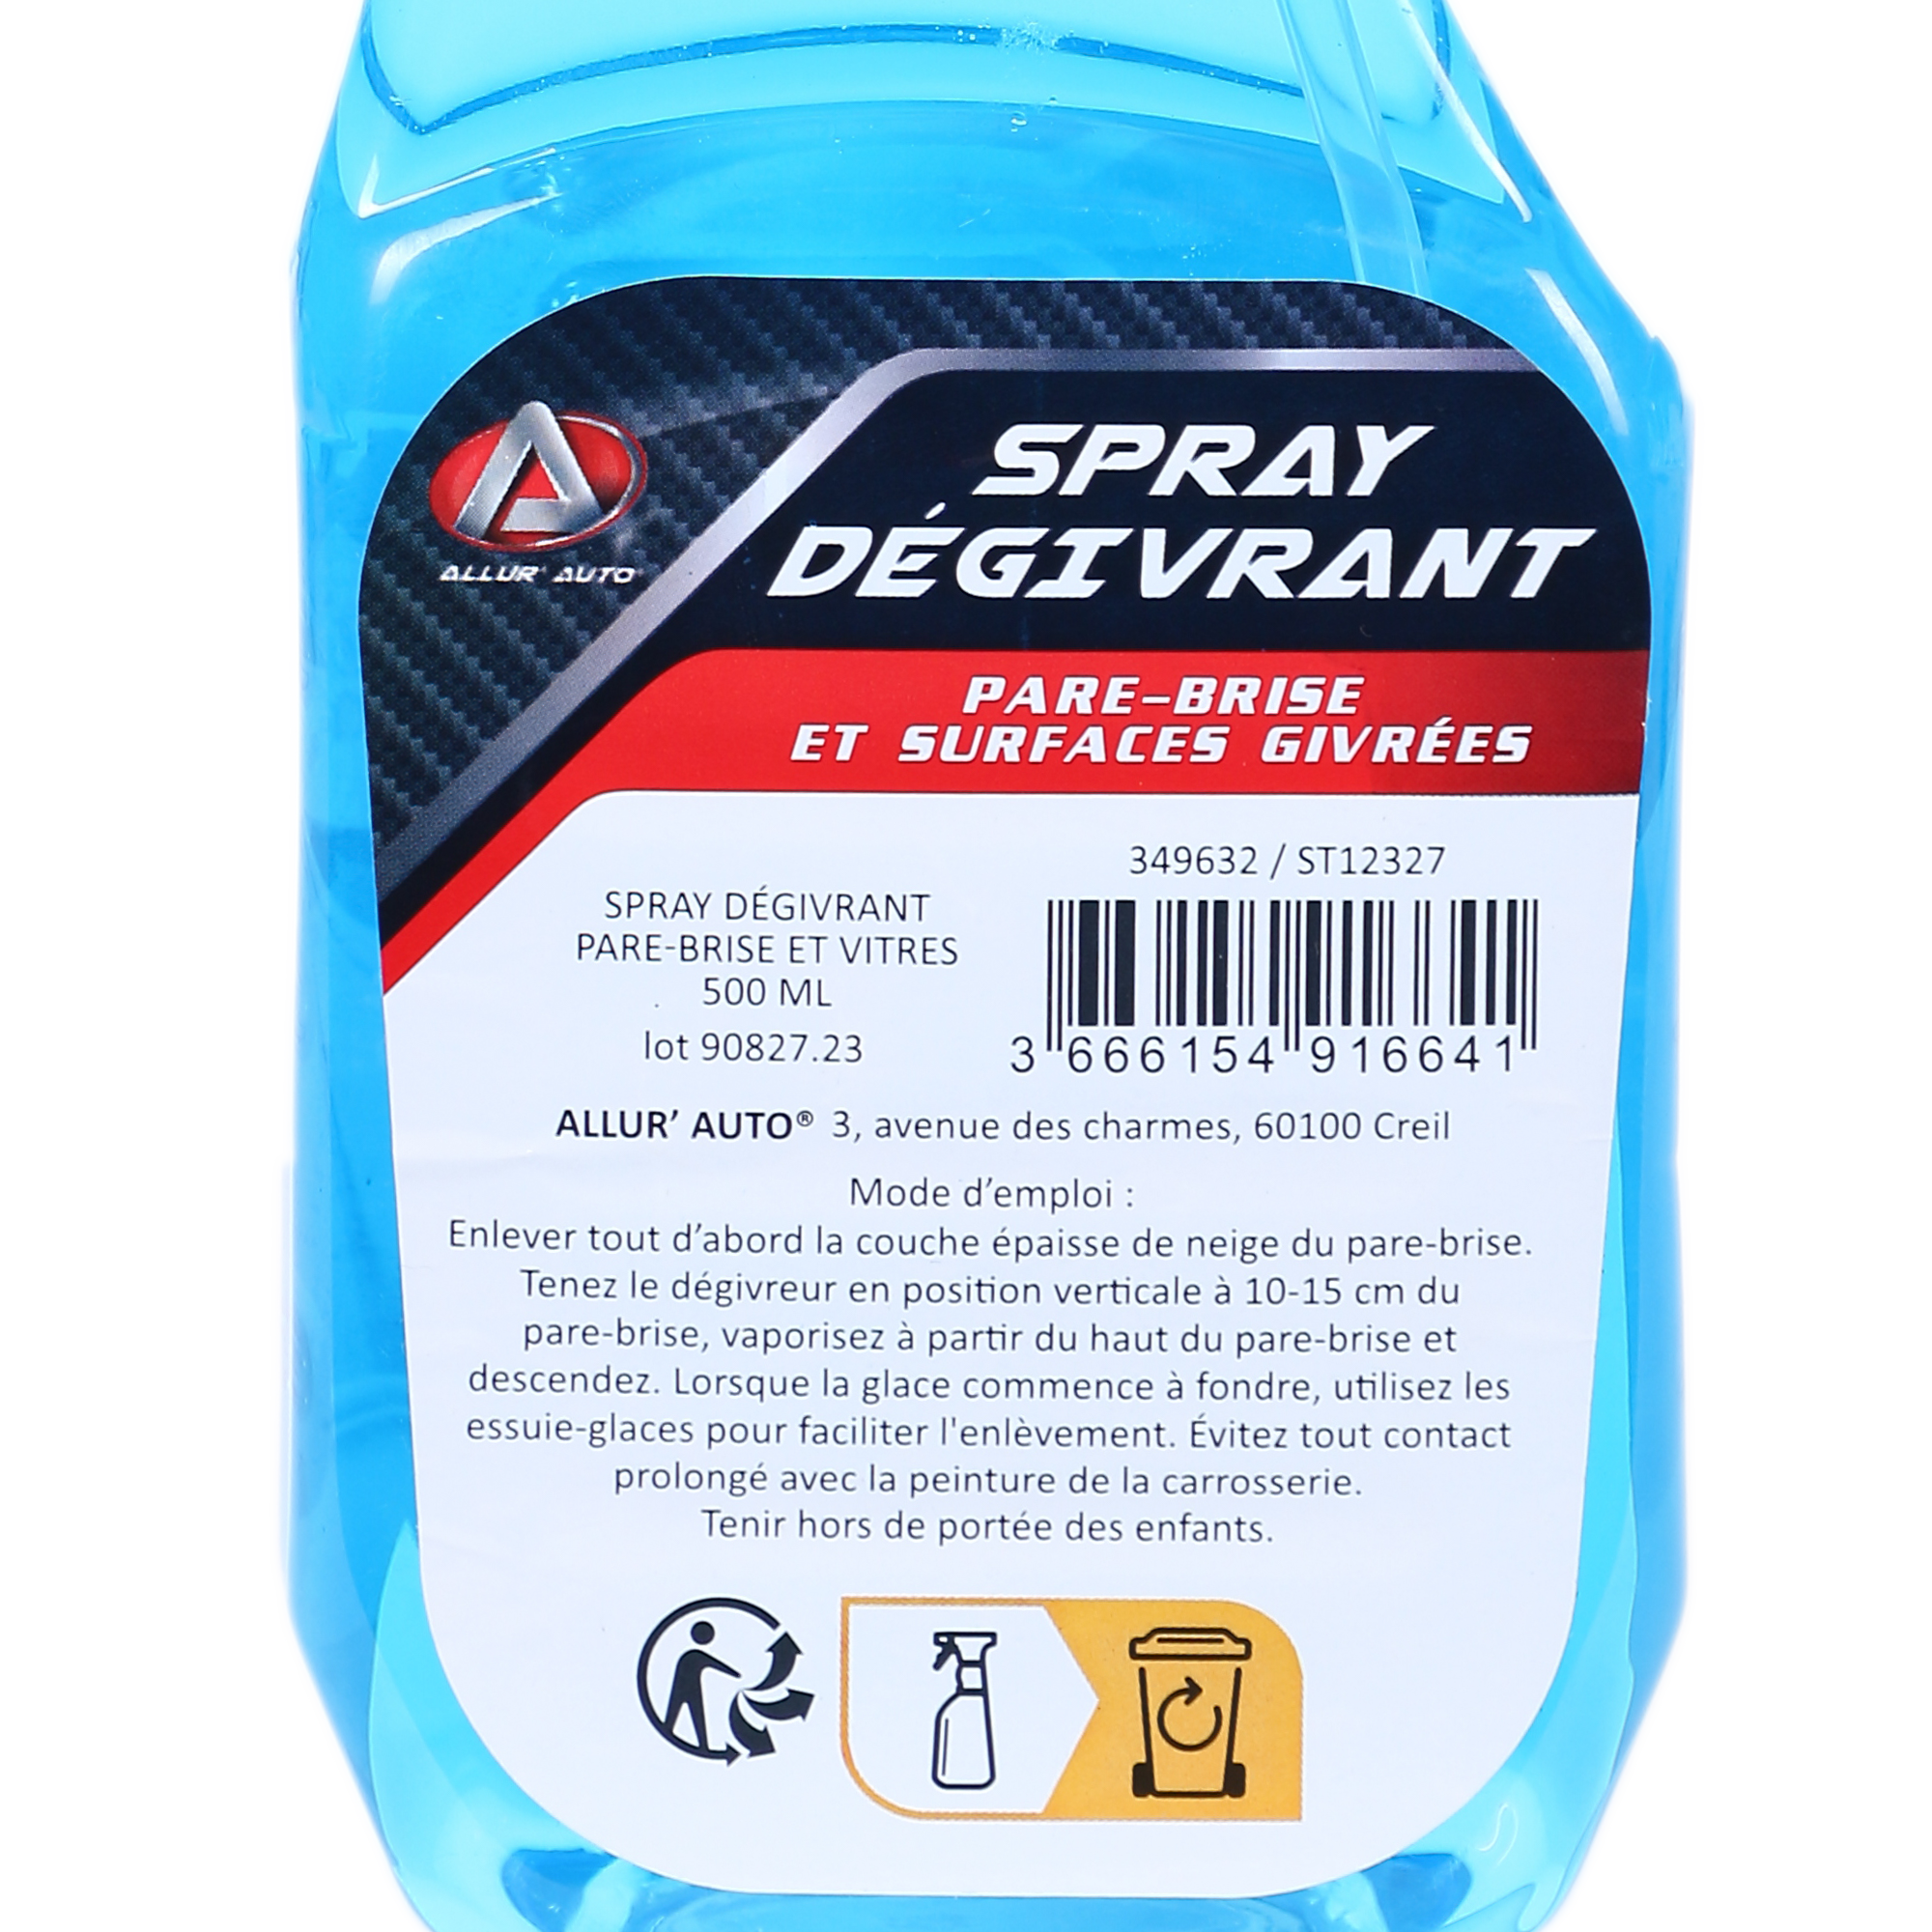 SPRAY DEGIVRANT 500 ML, spray degivrant 